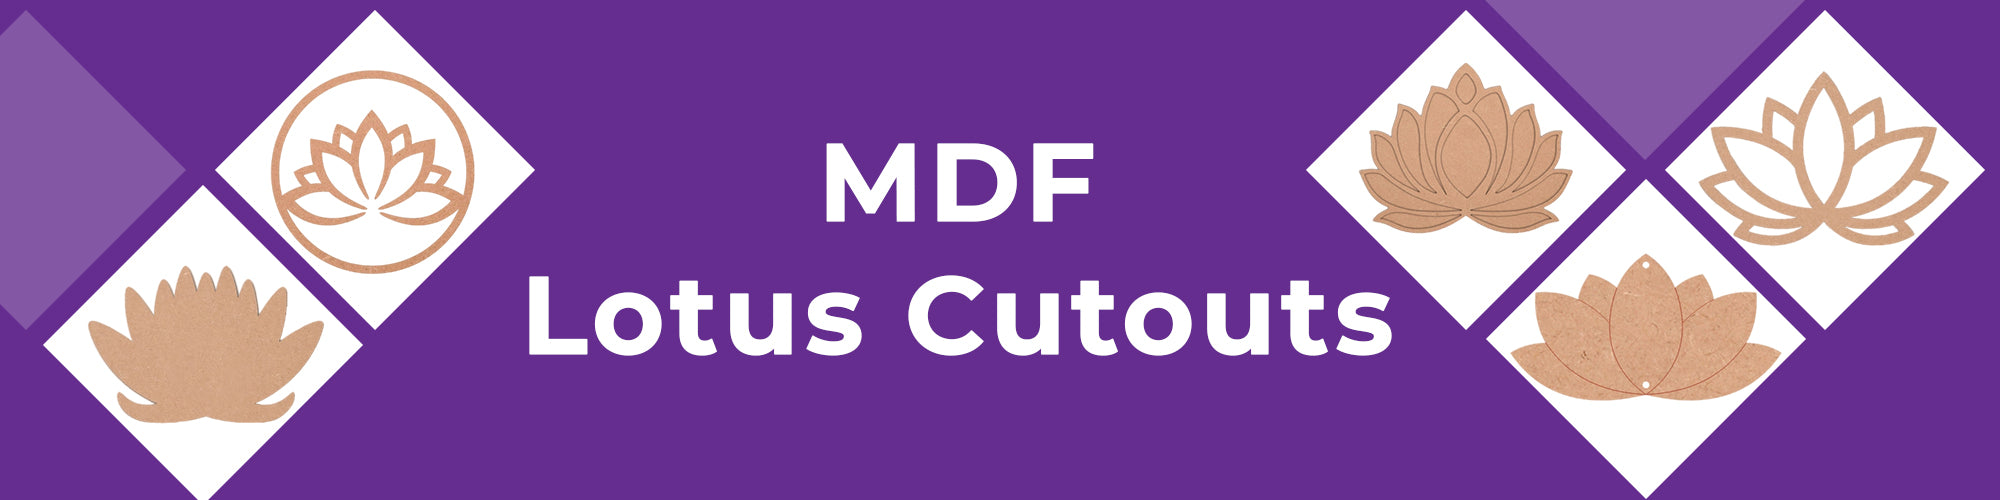 MDF Lotus Cutout